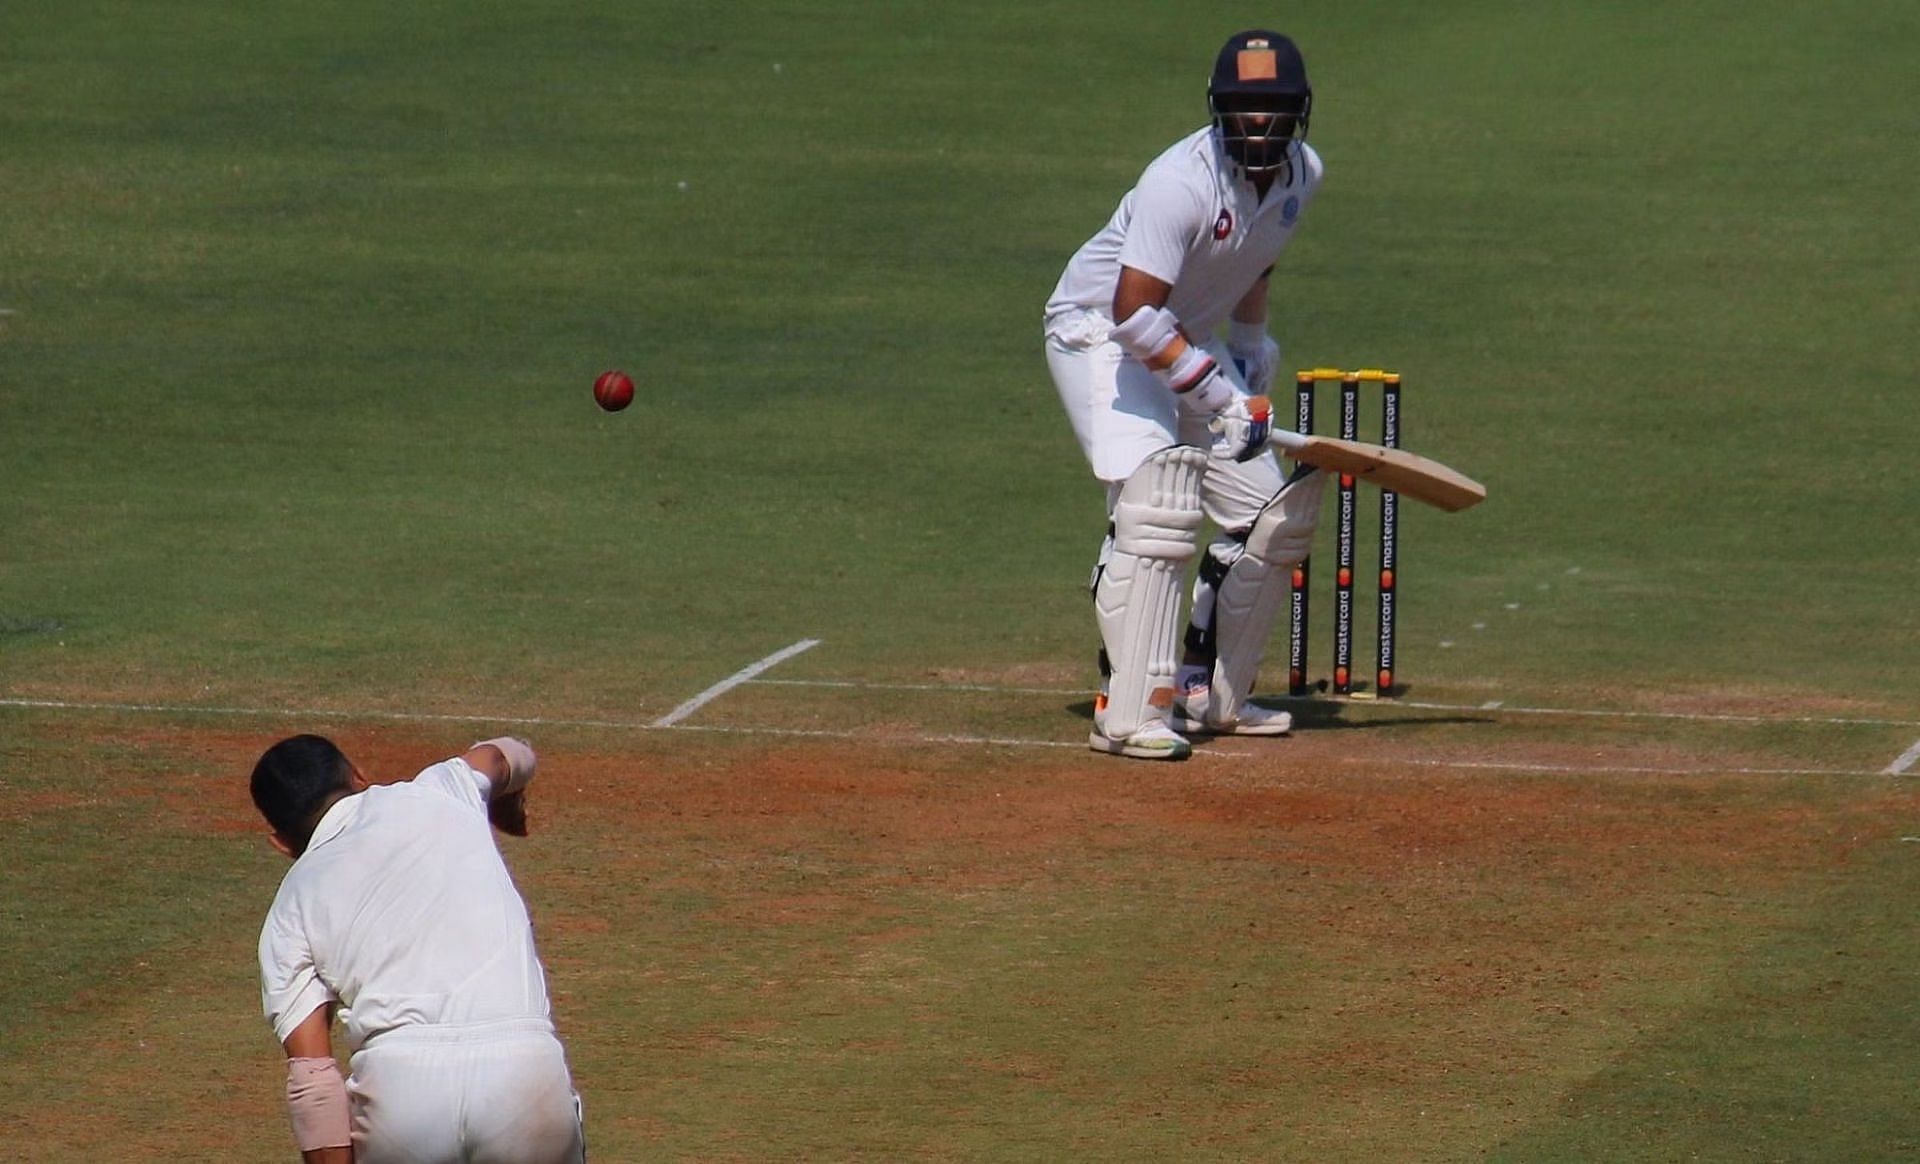 Hanuma Vihari batted left-handed in both innings of the Ranji Trophy quarterfinal against Madhya Pradesh. [P/C: Lalith Kalidas]